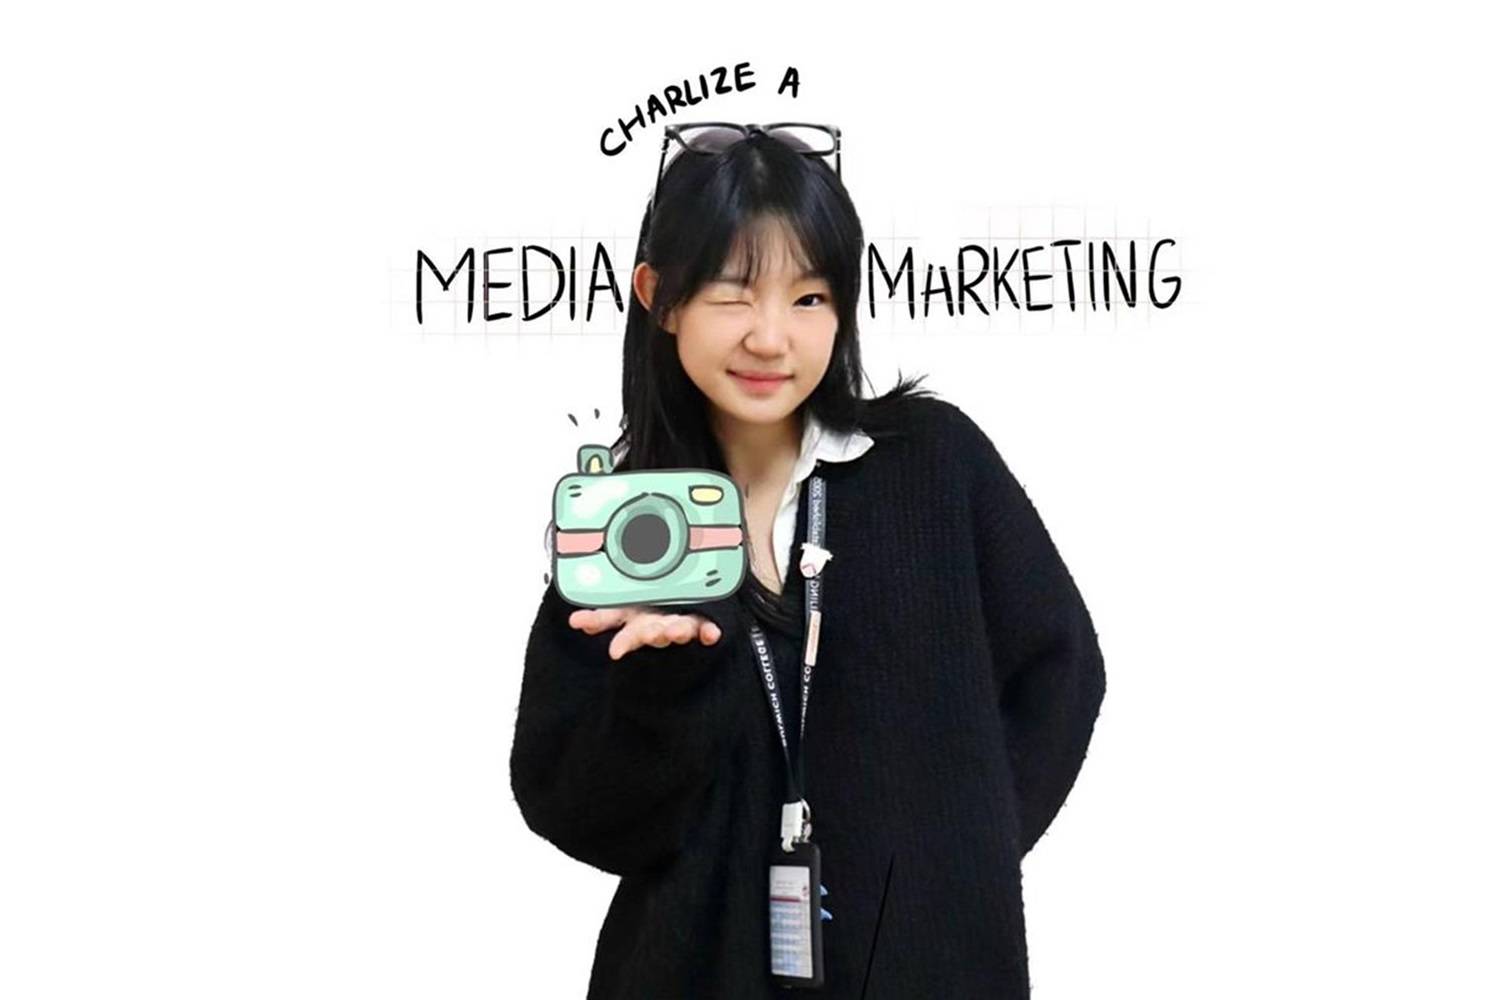 Media & Marketing Prefects: Charlize A